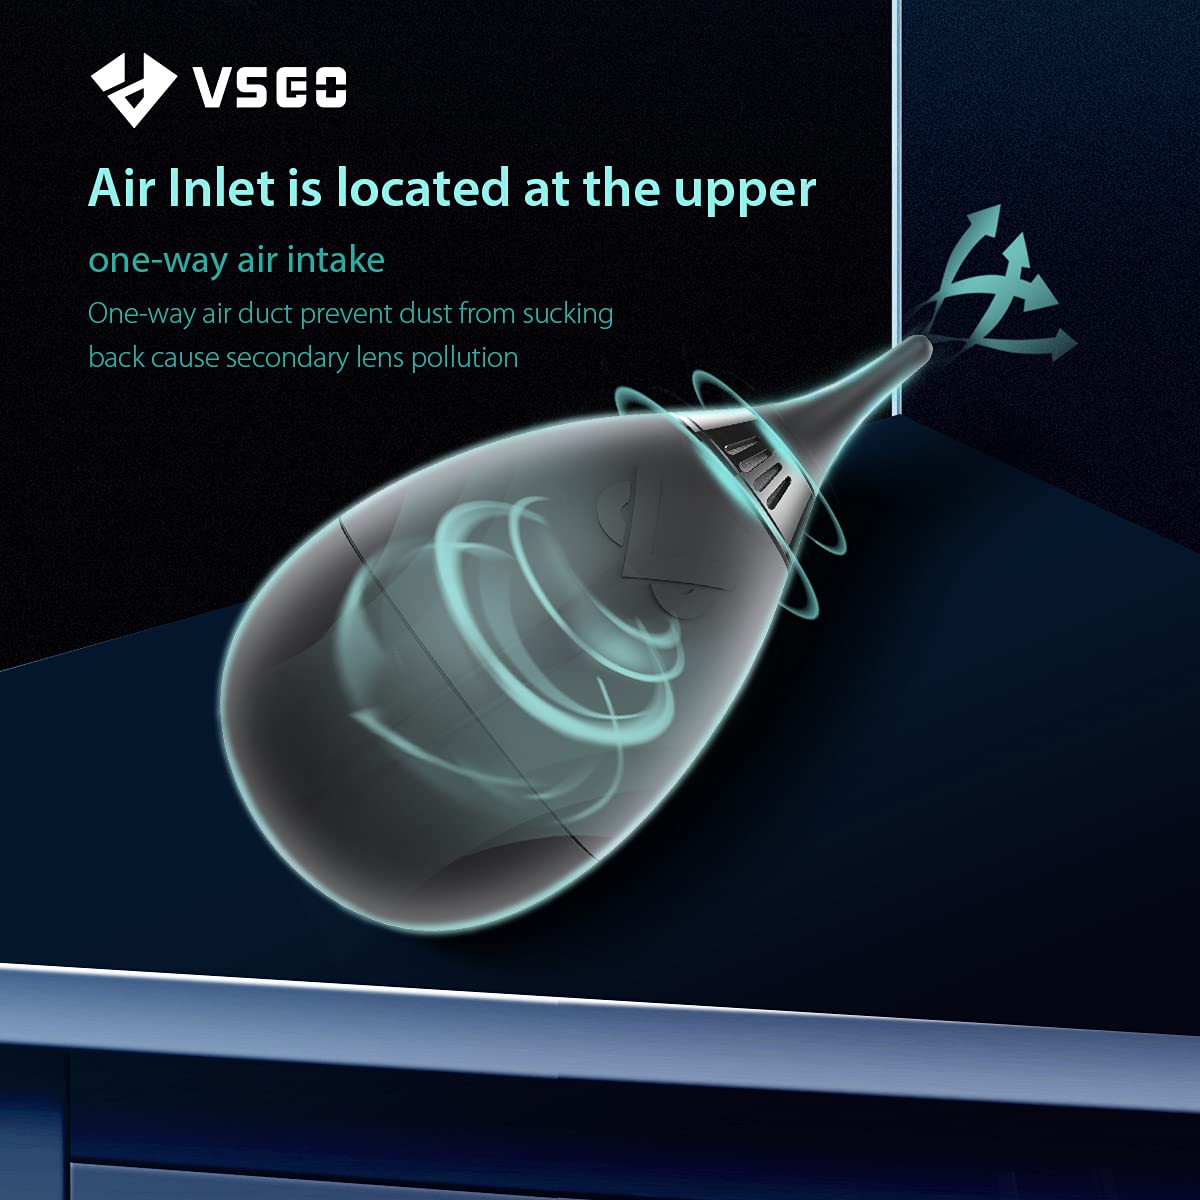 Vsgo tumbler luftblæser v -b01e gummikugle med filter til nikon, sony, canon kameralinse &amp; sensor rengøring